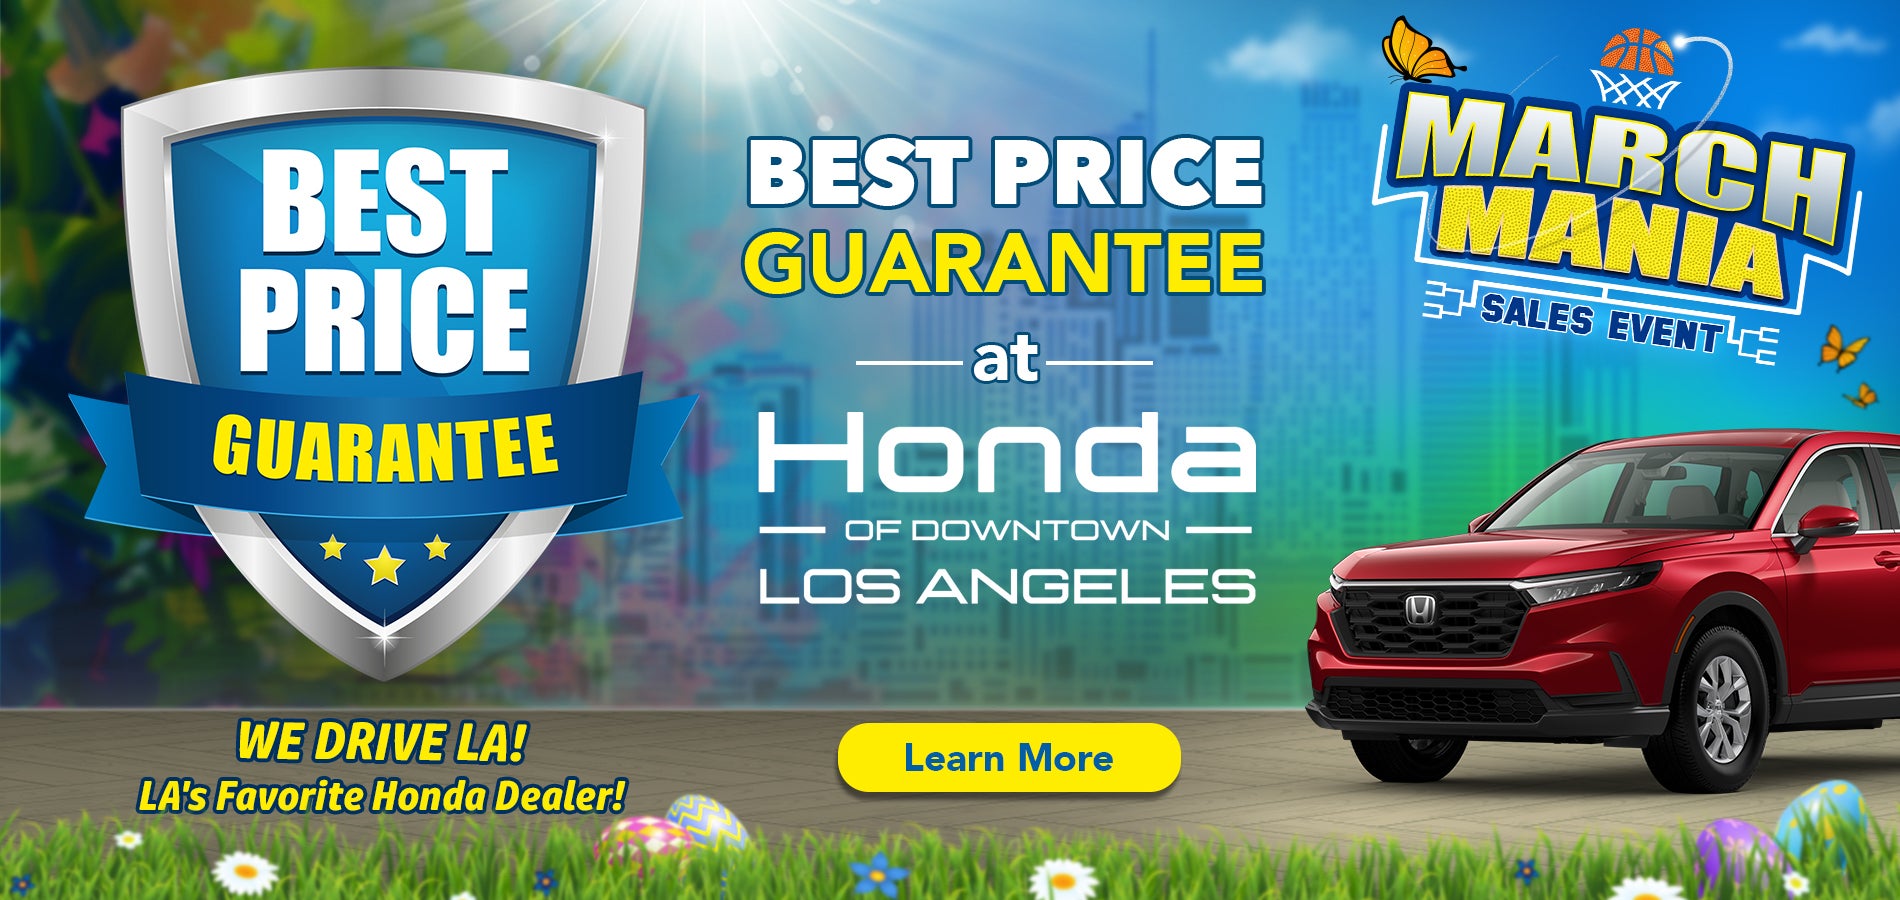 Best Price Guarantee at Honda DTLA!